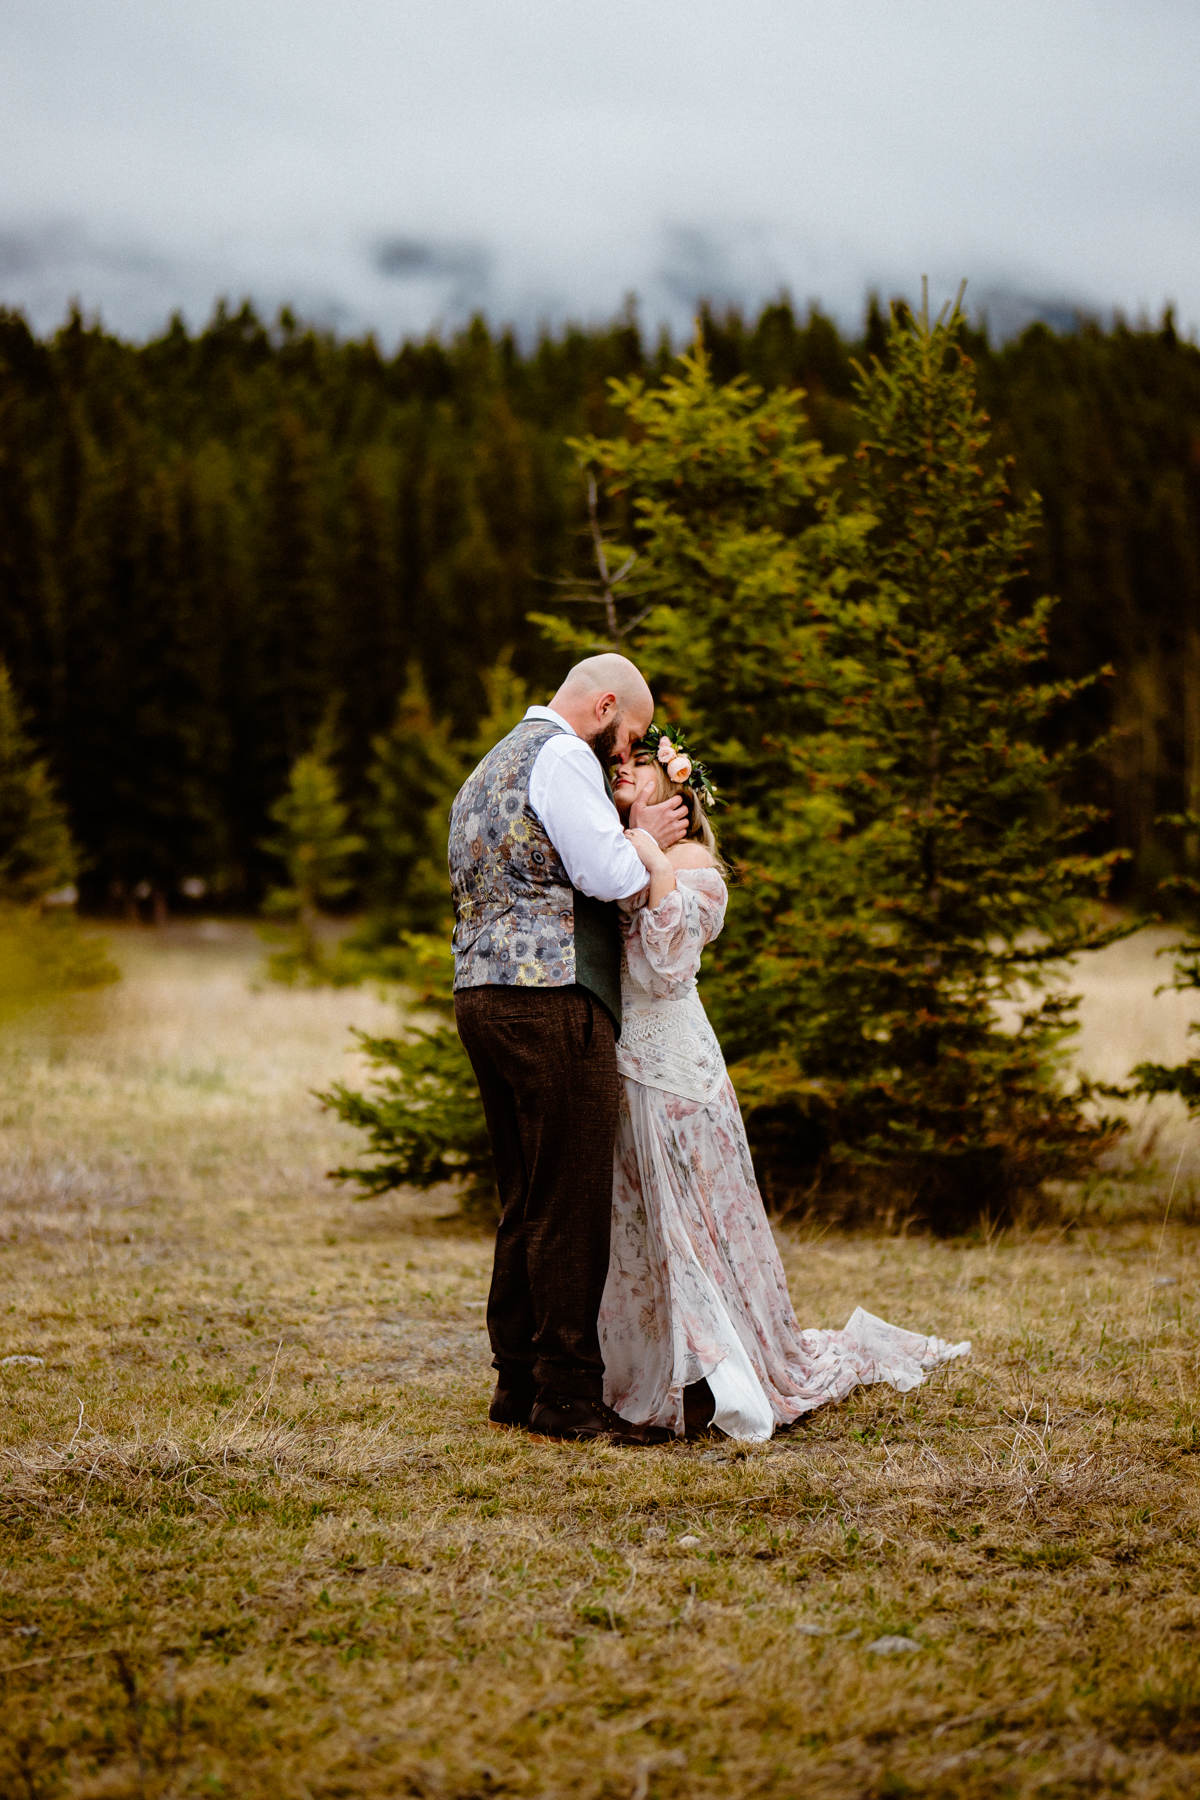 Stormy and Rainy Banff Wedding Photography - Photo 45